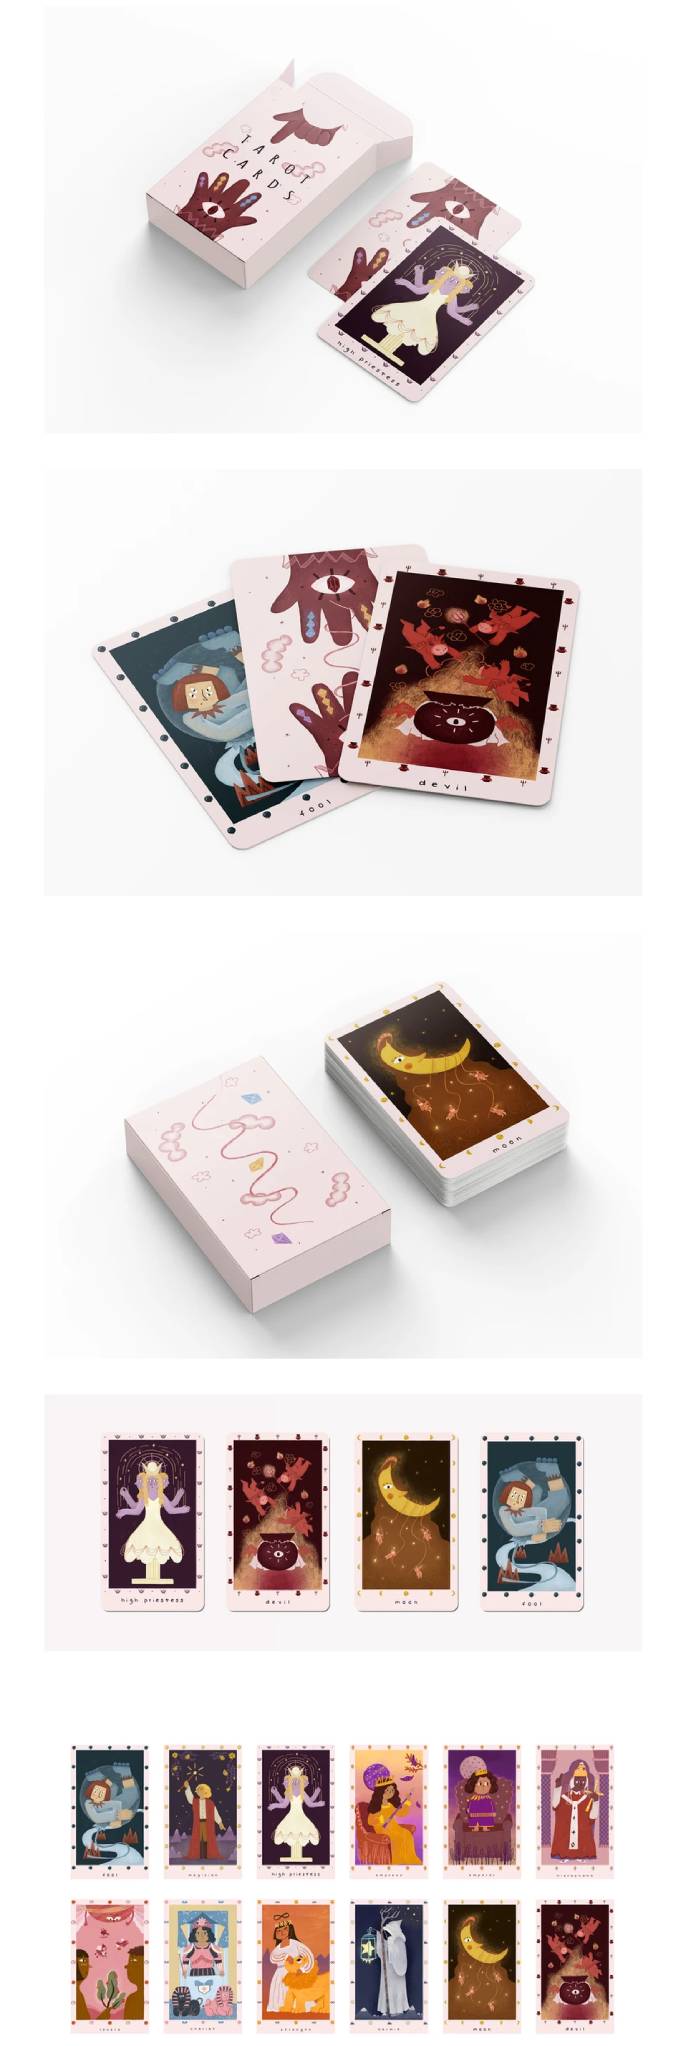 Tarot Cards illustrated by Muge Li